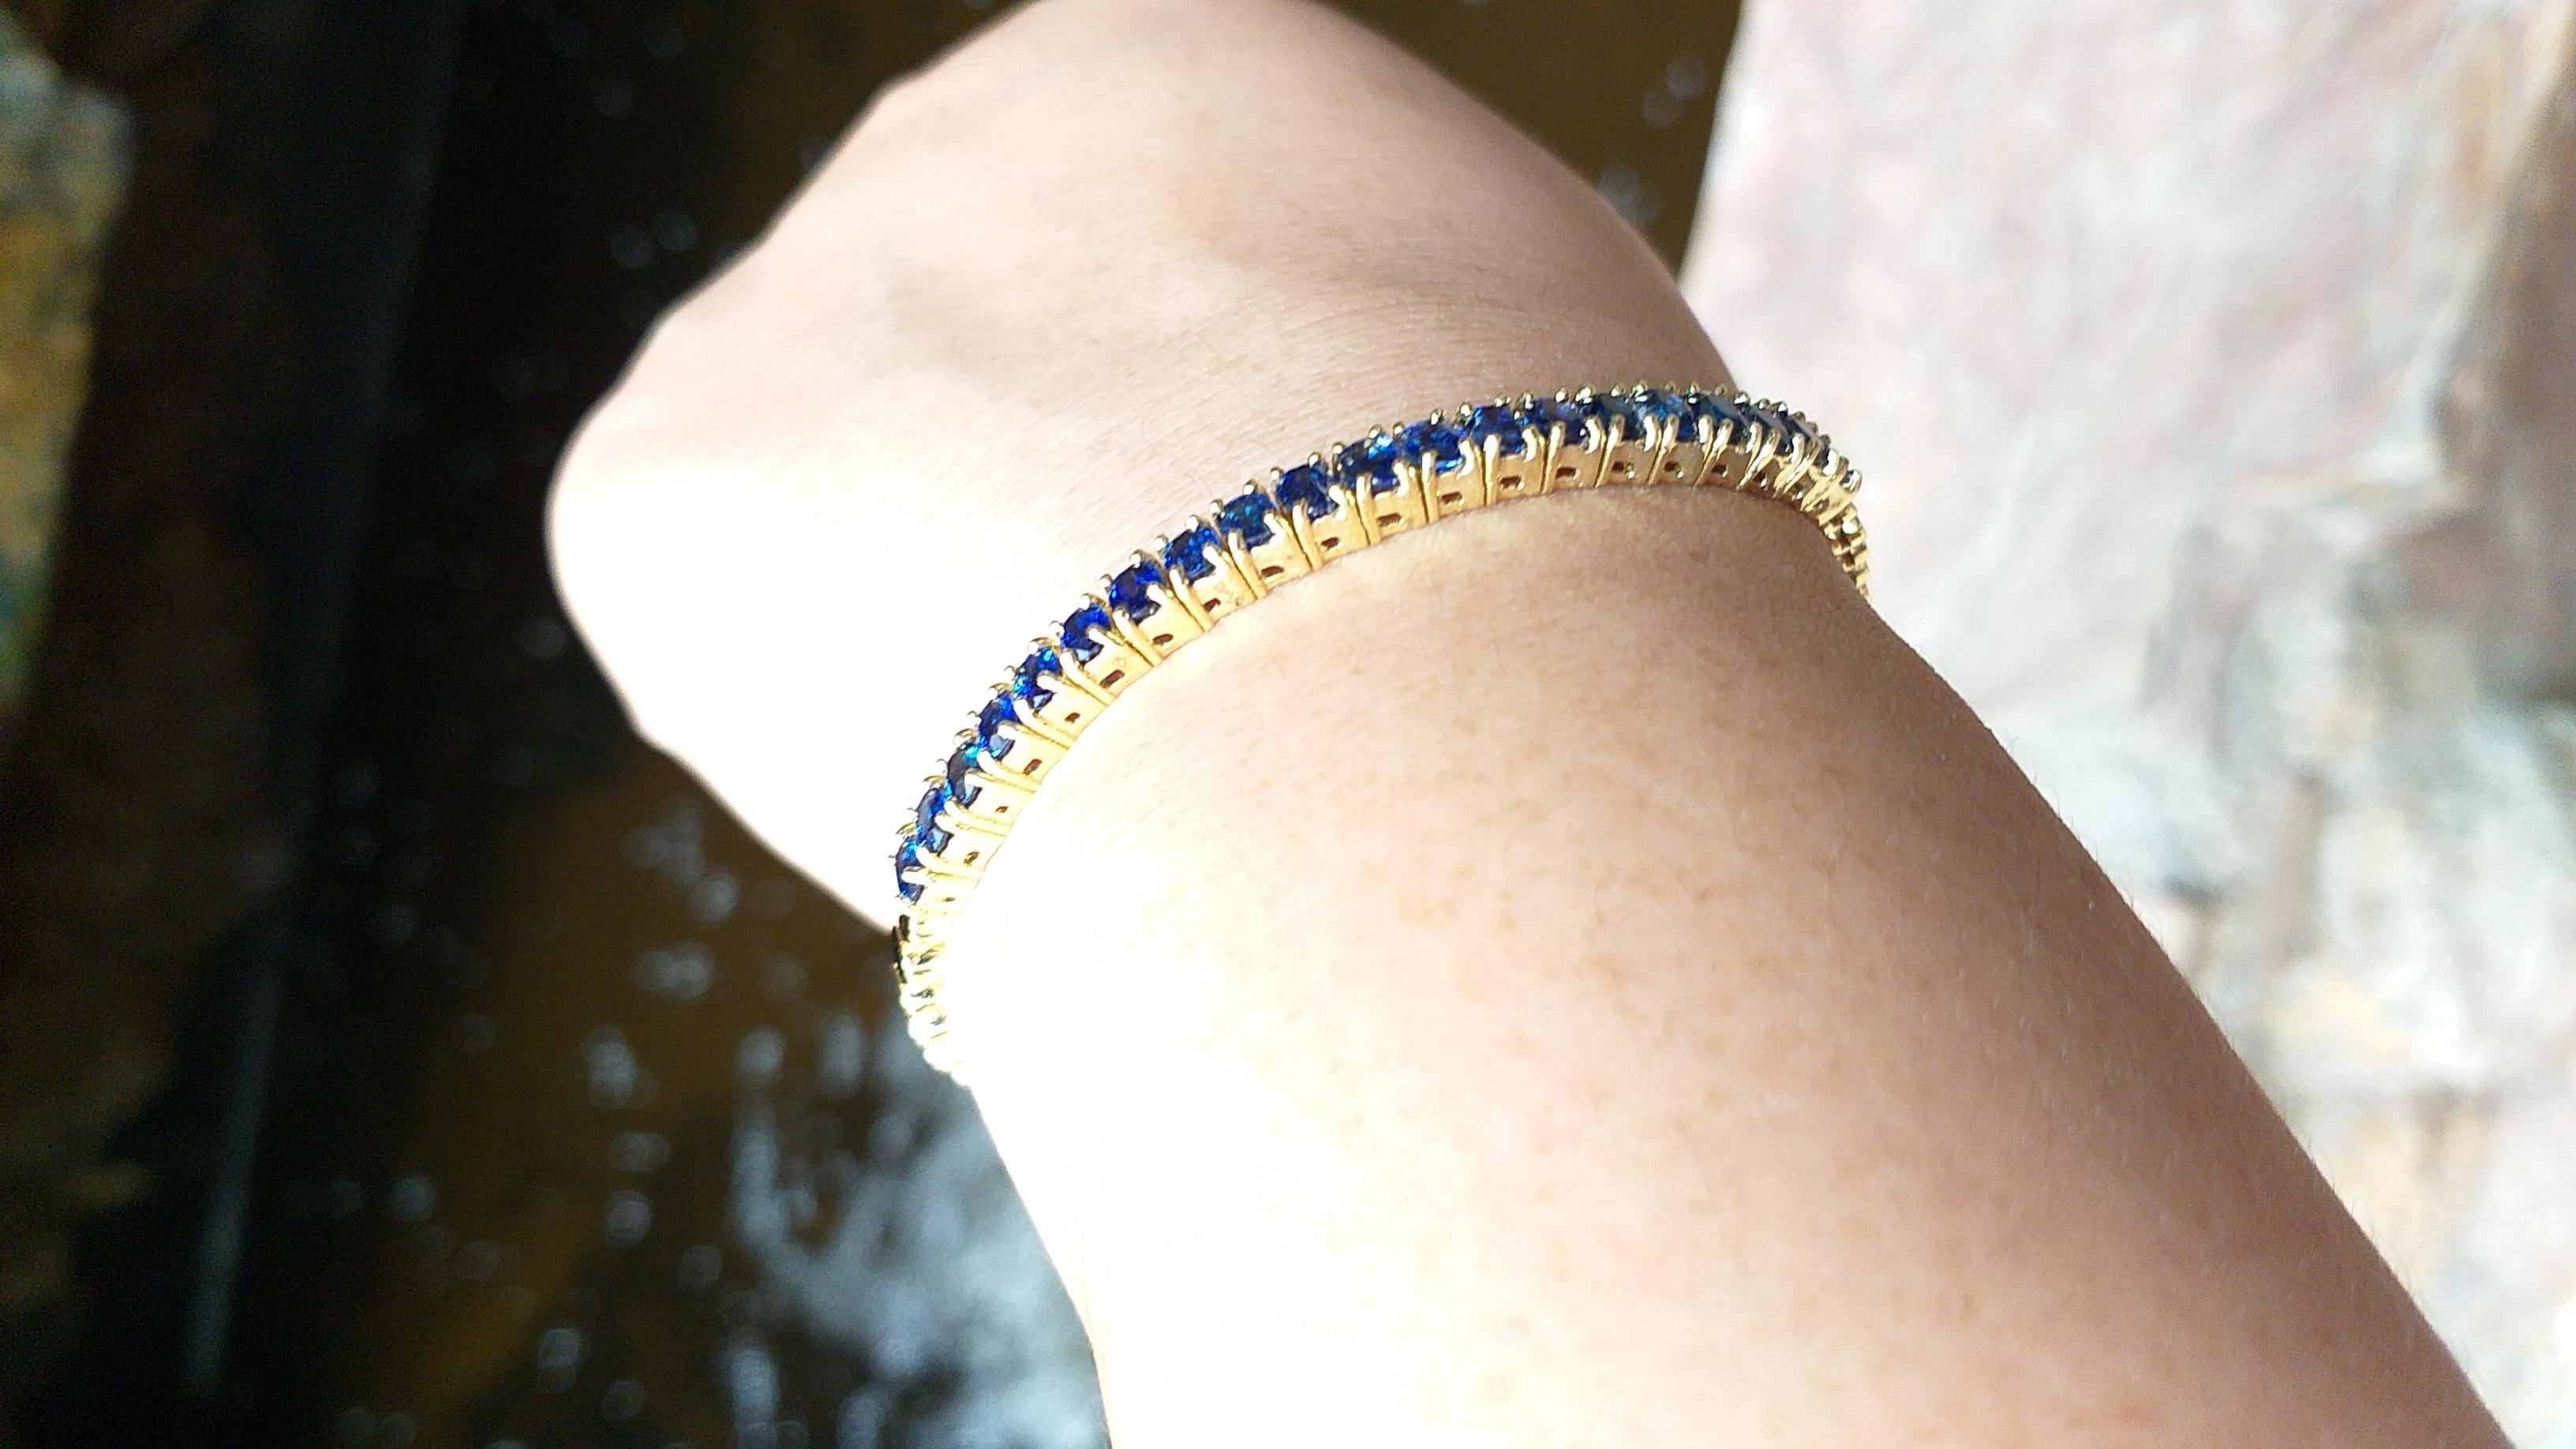 Blue Sapphire 4.70 carats Bracelet set in 18 Karat Gold Settings

Width:  0.4 cm 
Length: 18.0 cm
Total Weight: 16.88 grams

